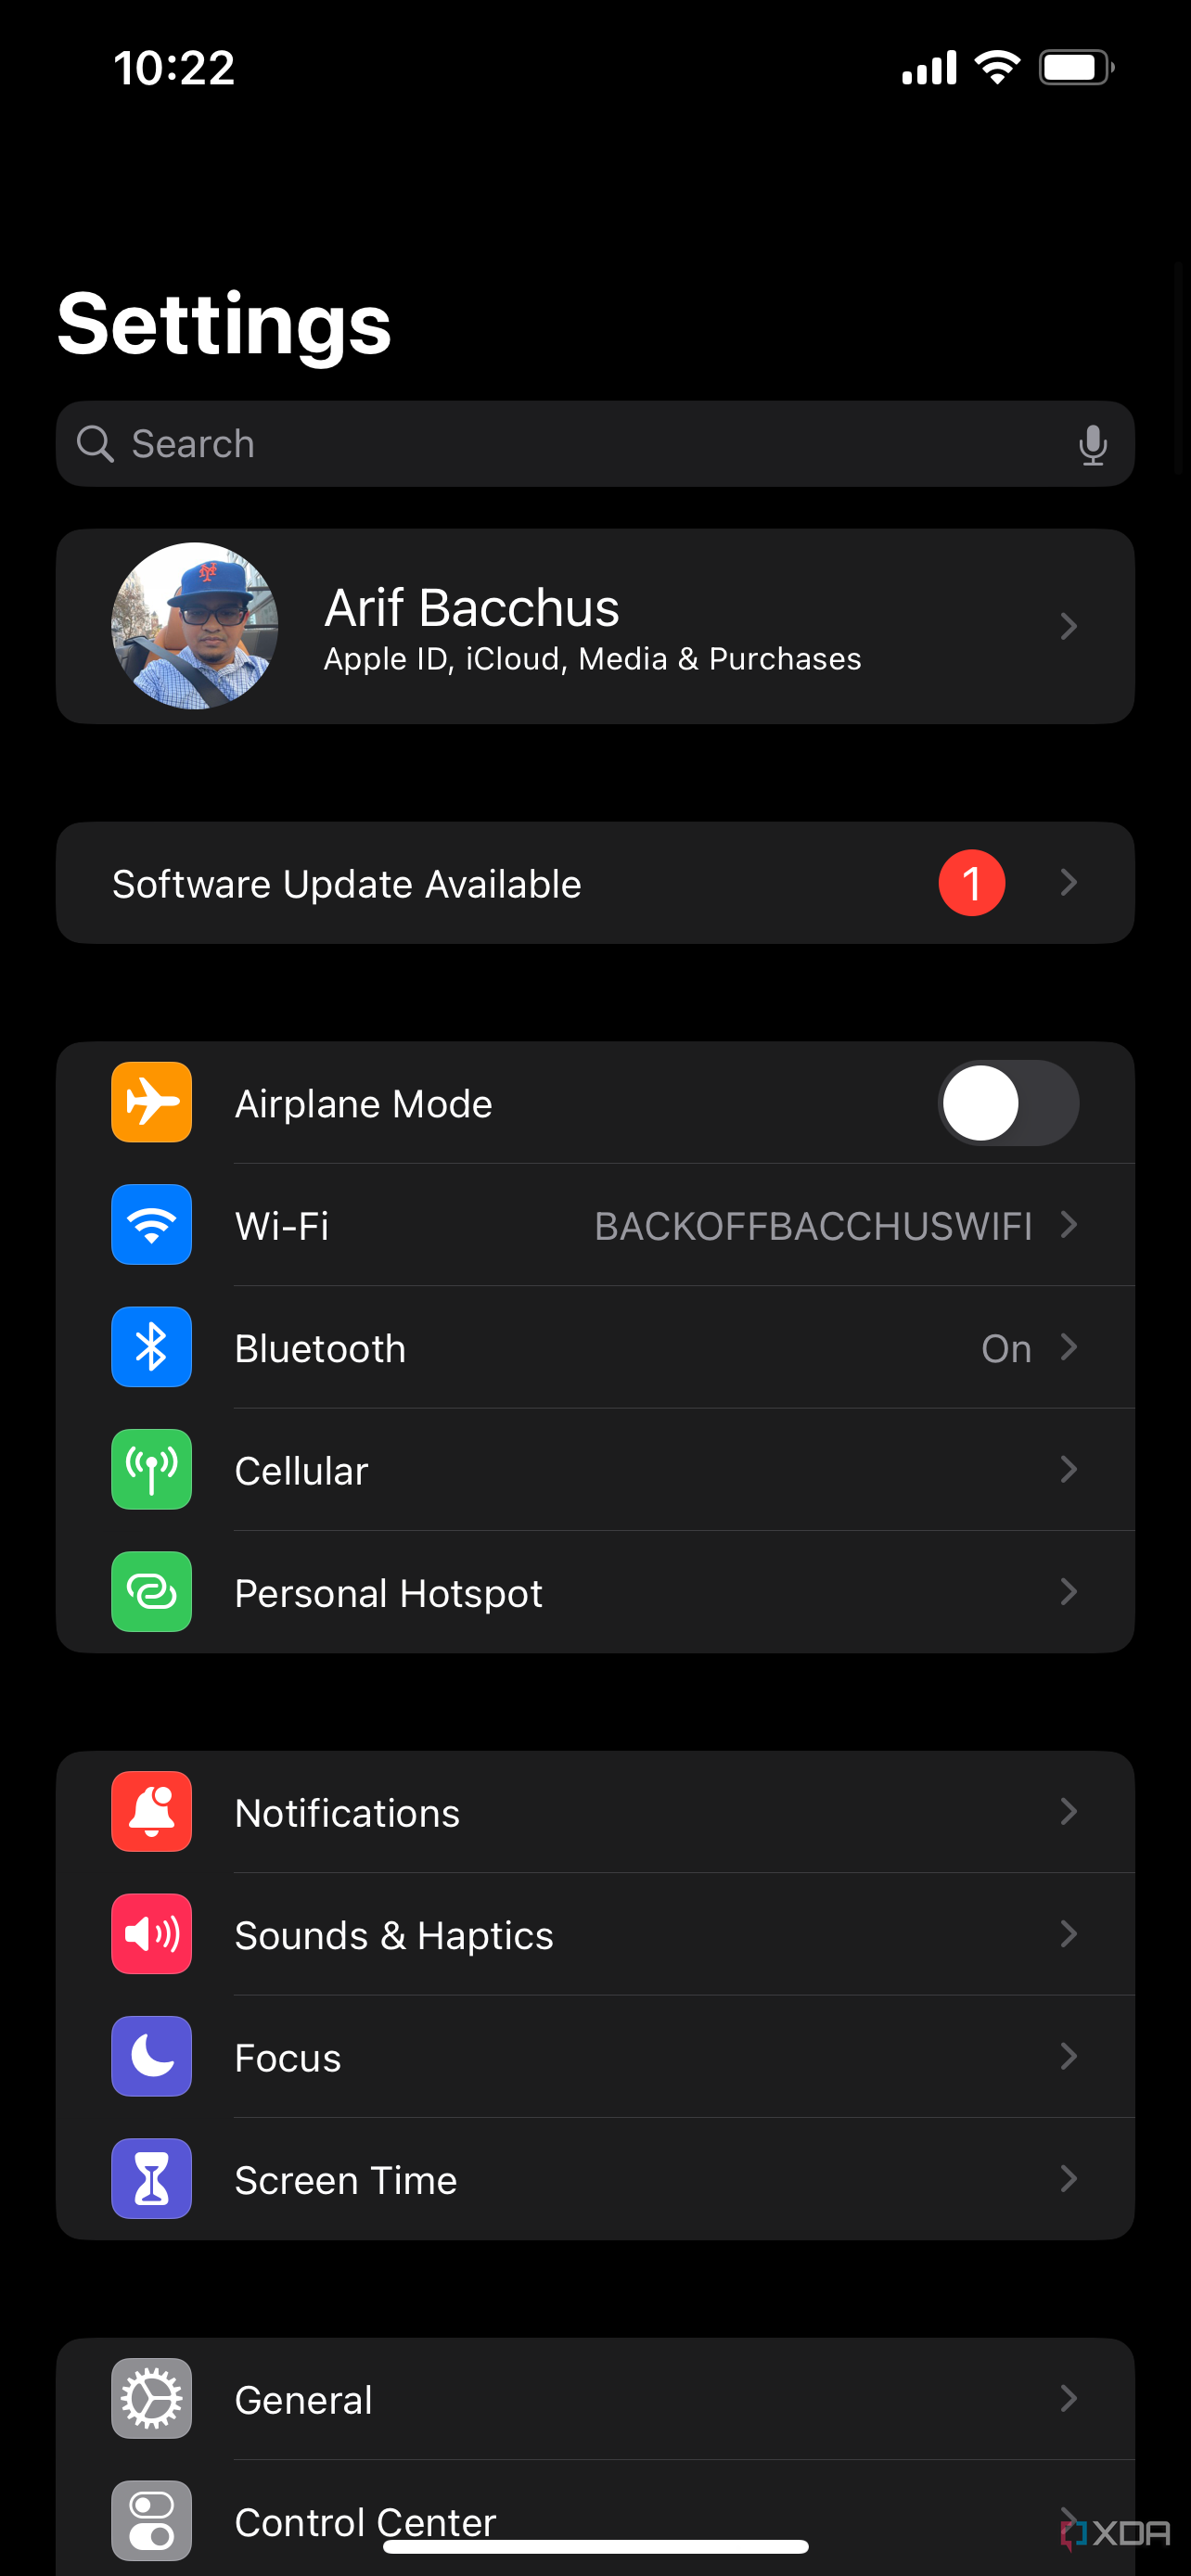 The iOS settings app